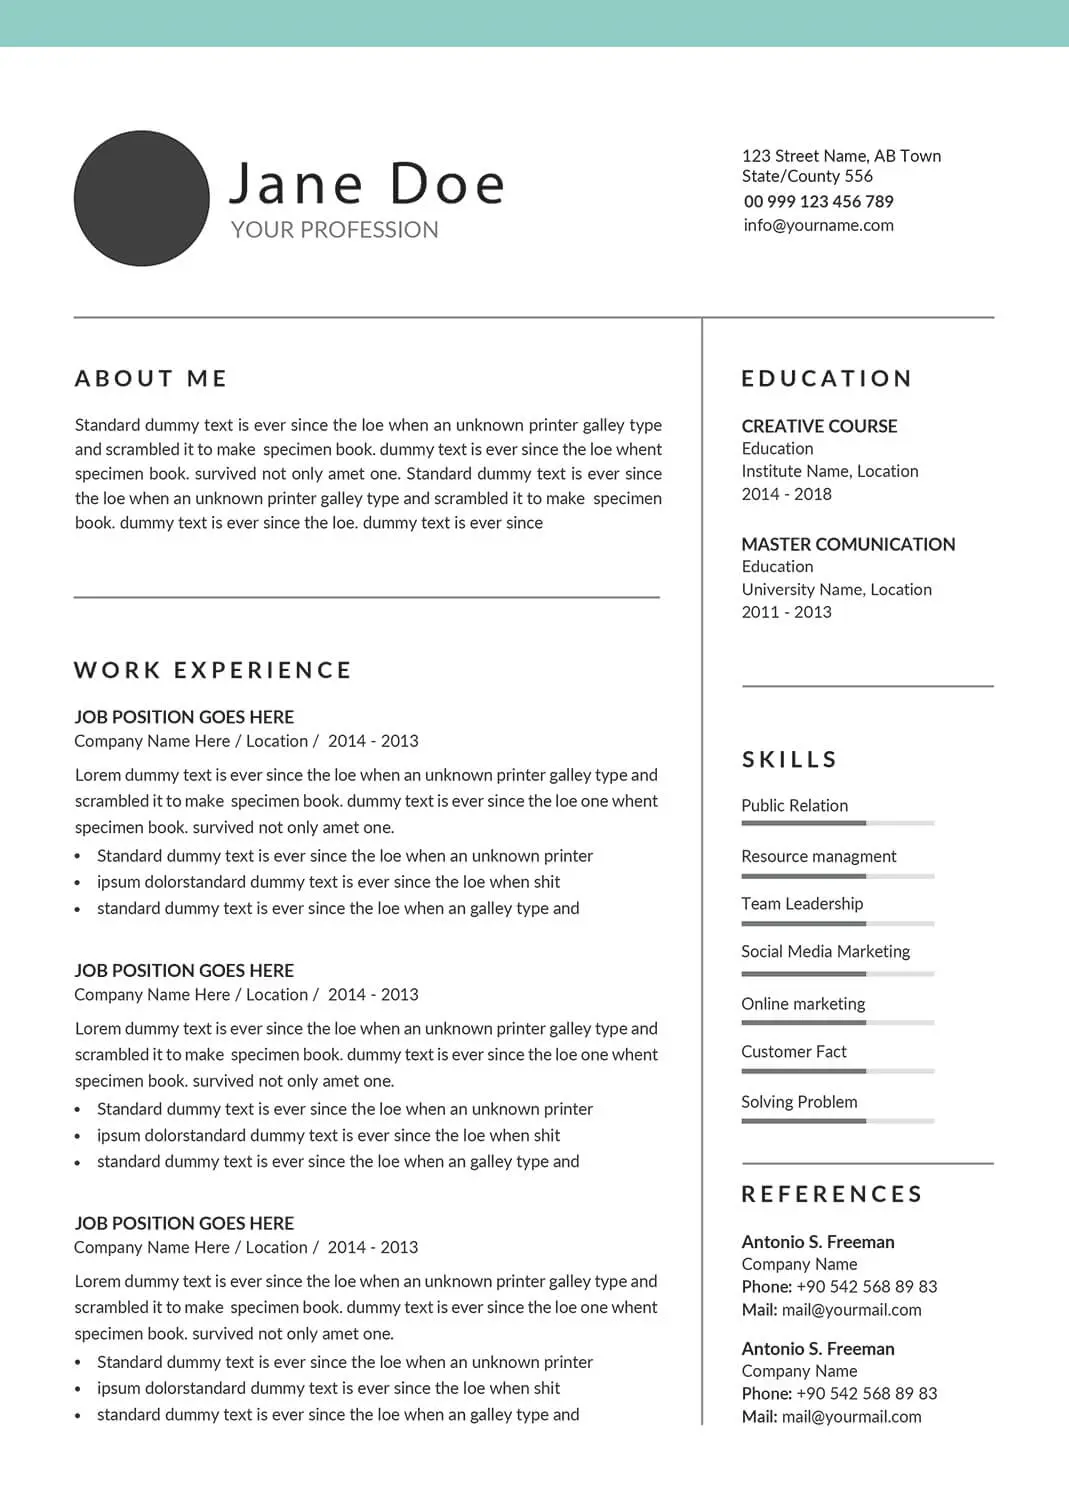 national-sales-controller-resume